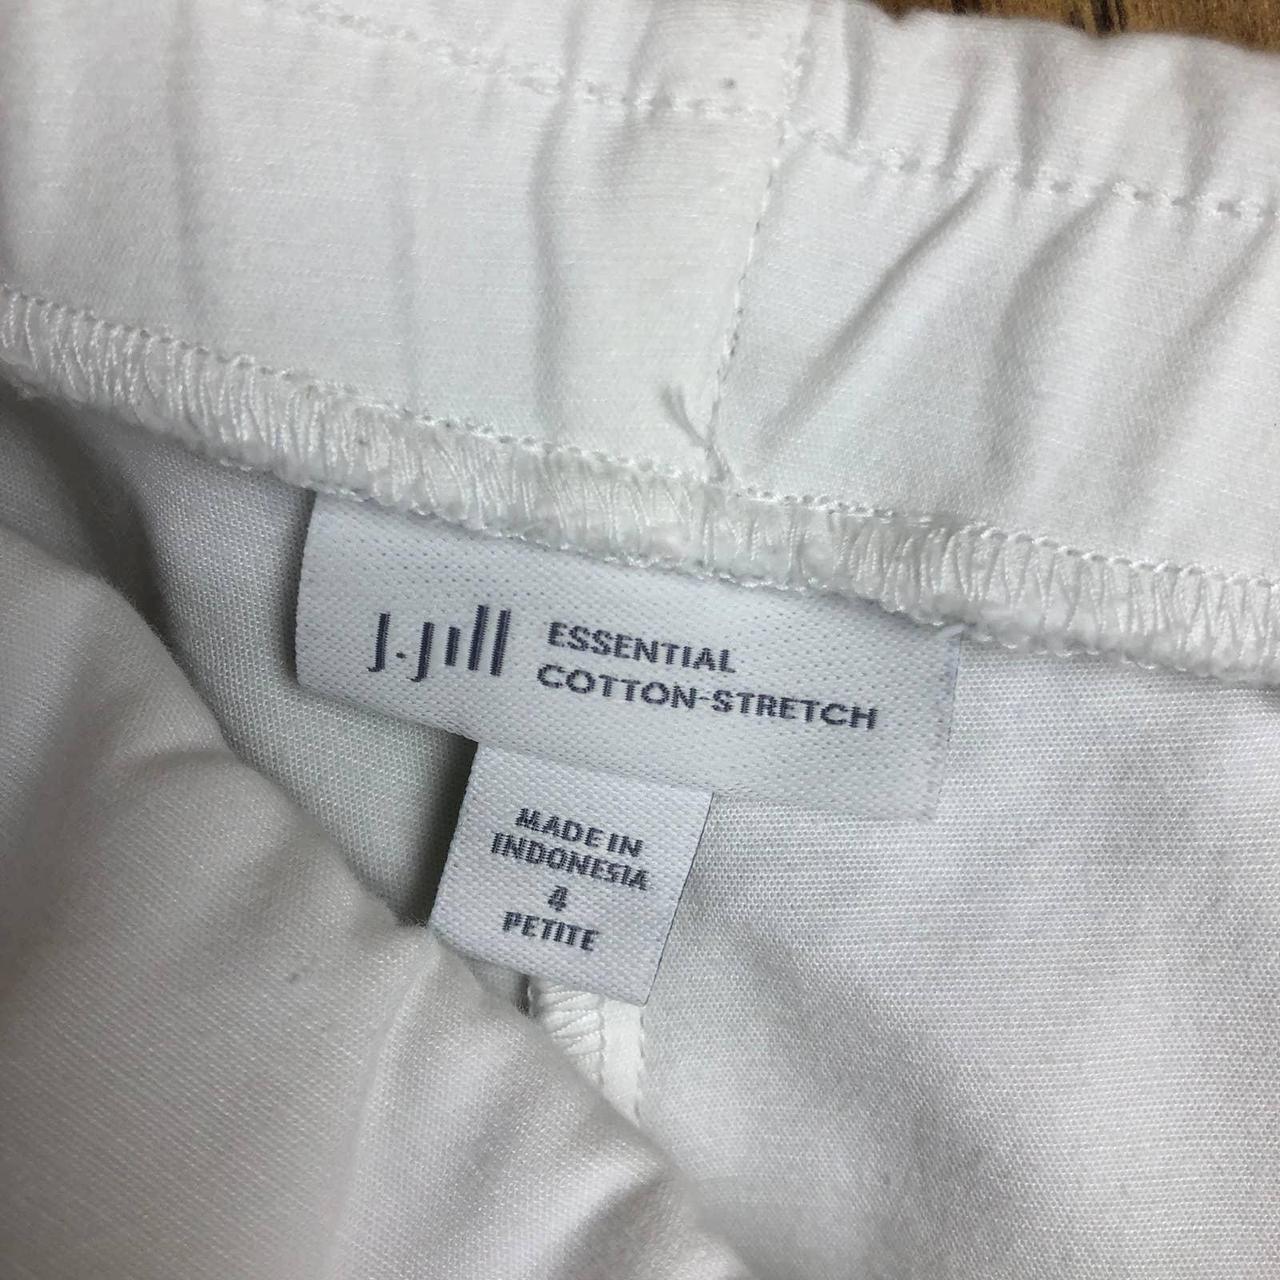 J jill Essential Cotton-Stretch Pants Size - Depop